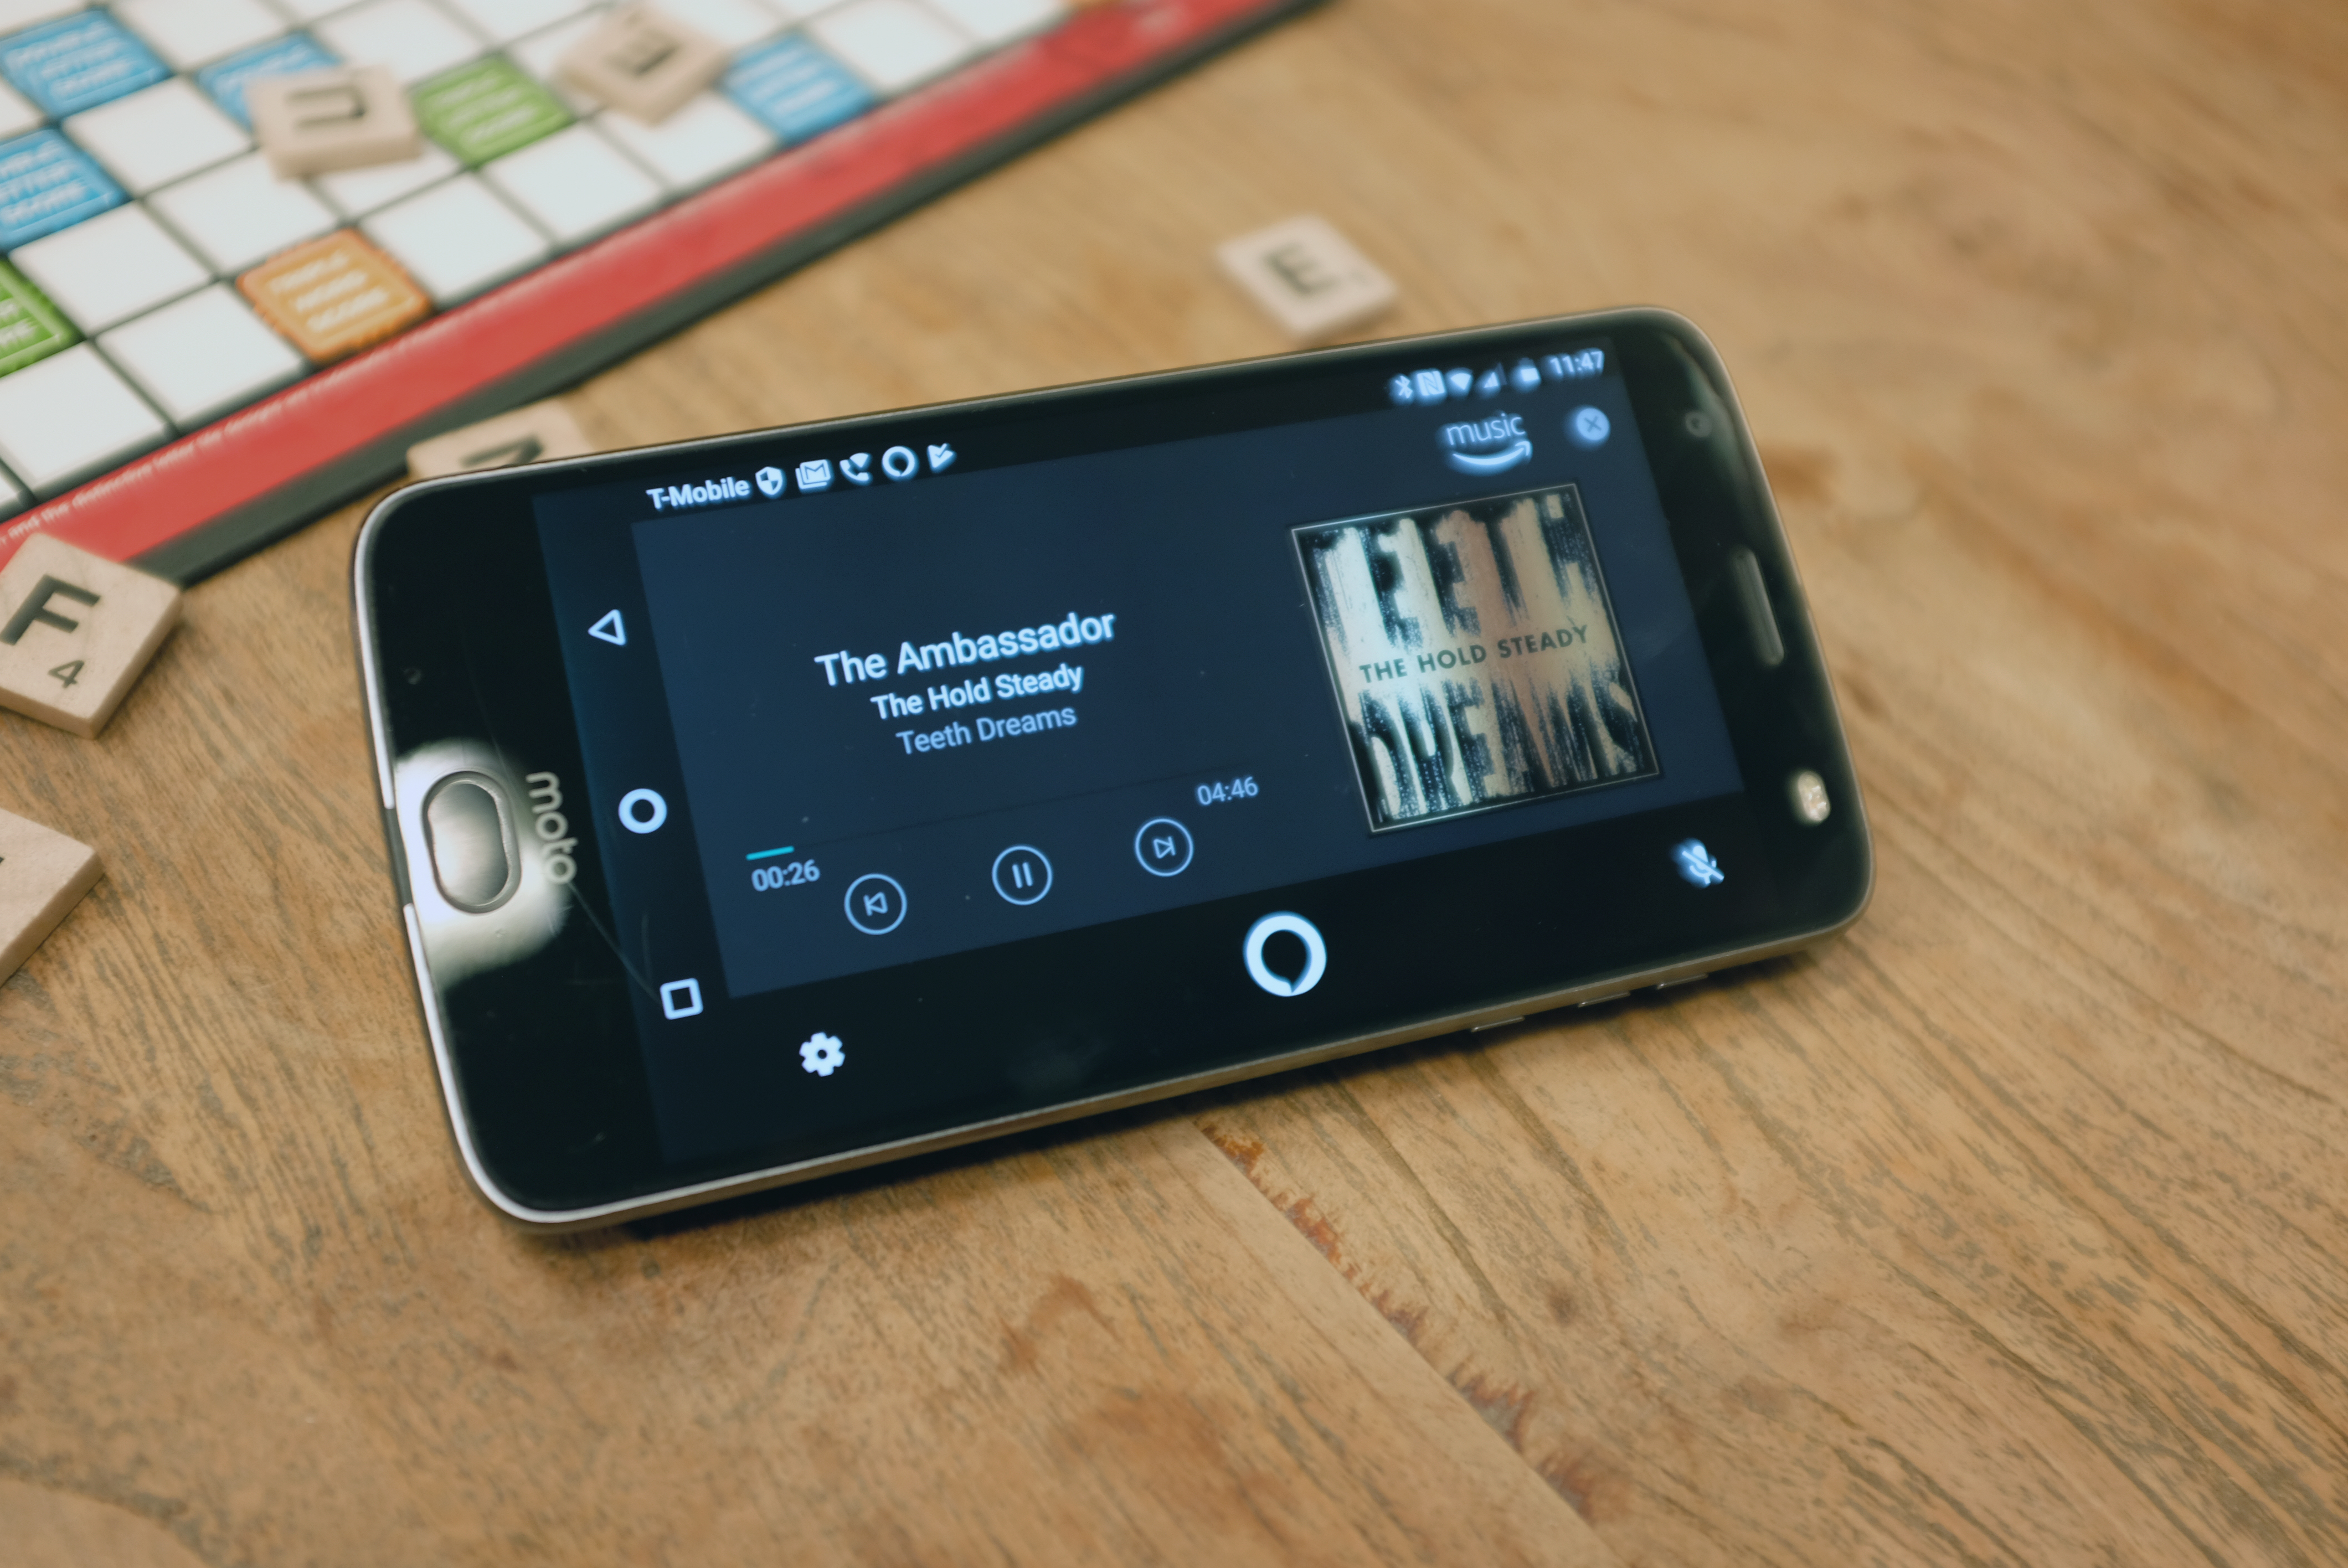 The Moto Z’s Alexa Smart Speaker is mostly useless